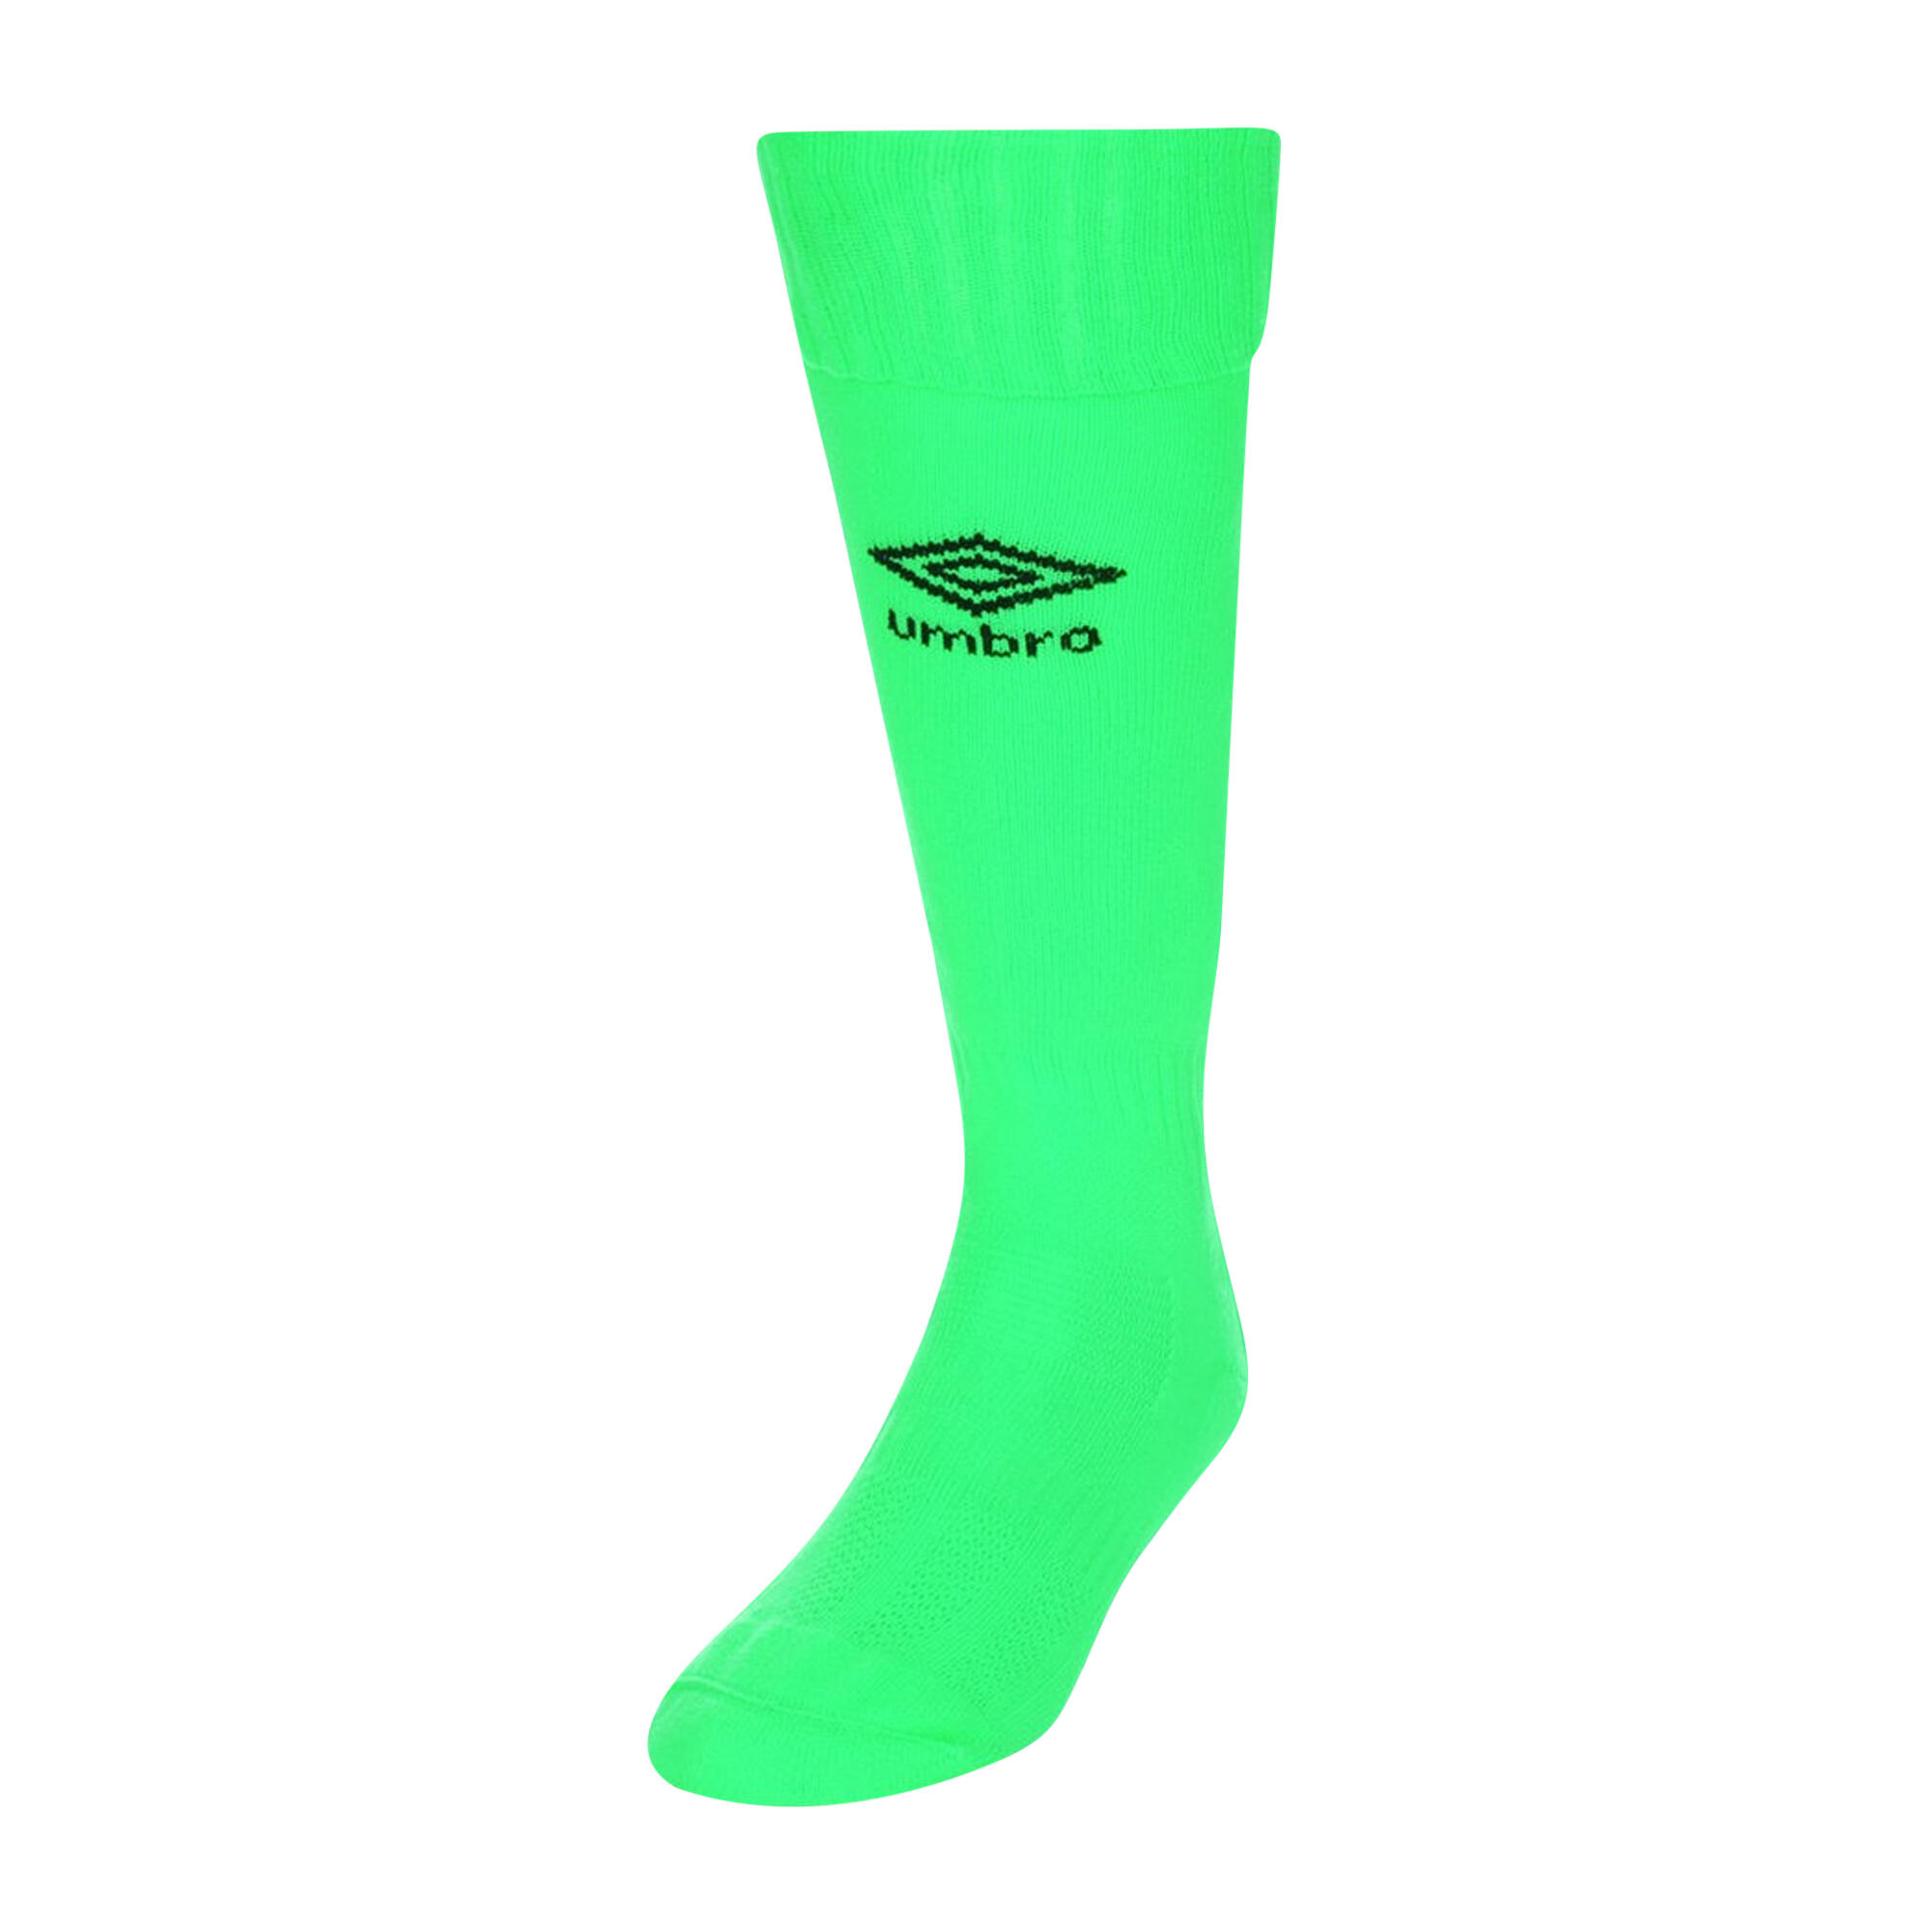 UMBRO Childrens/Kids Classico Socks (Green Gecko)